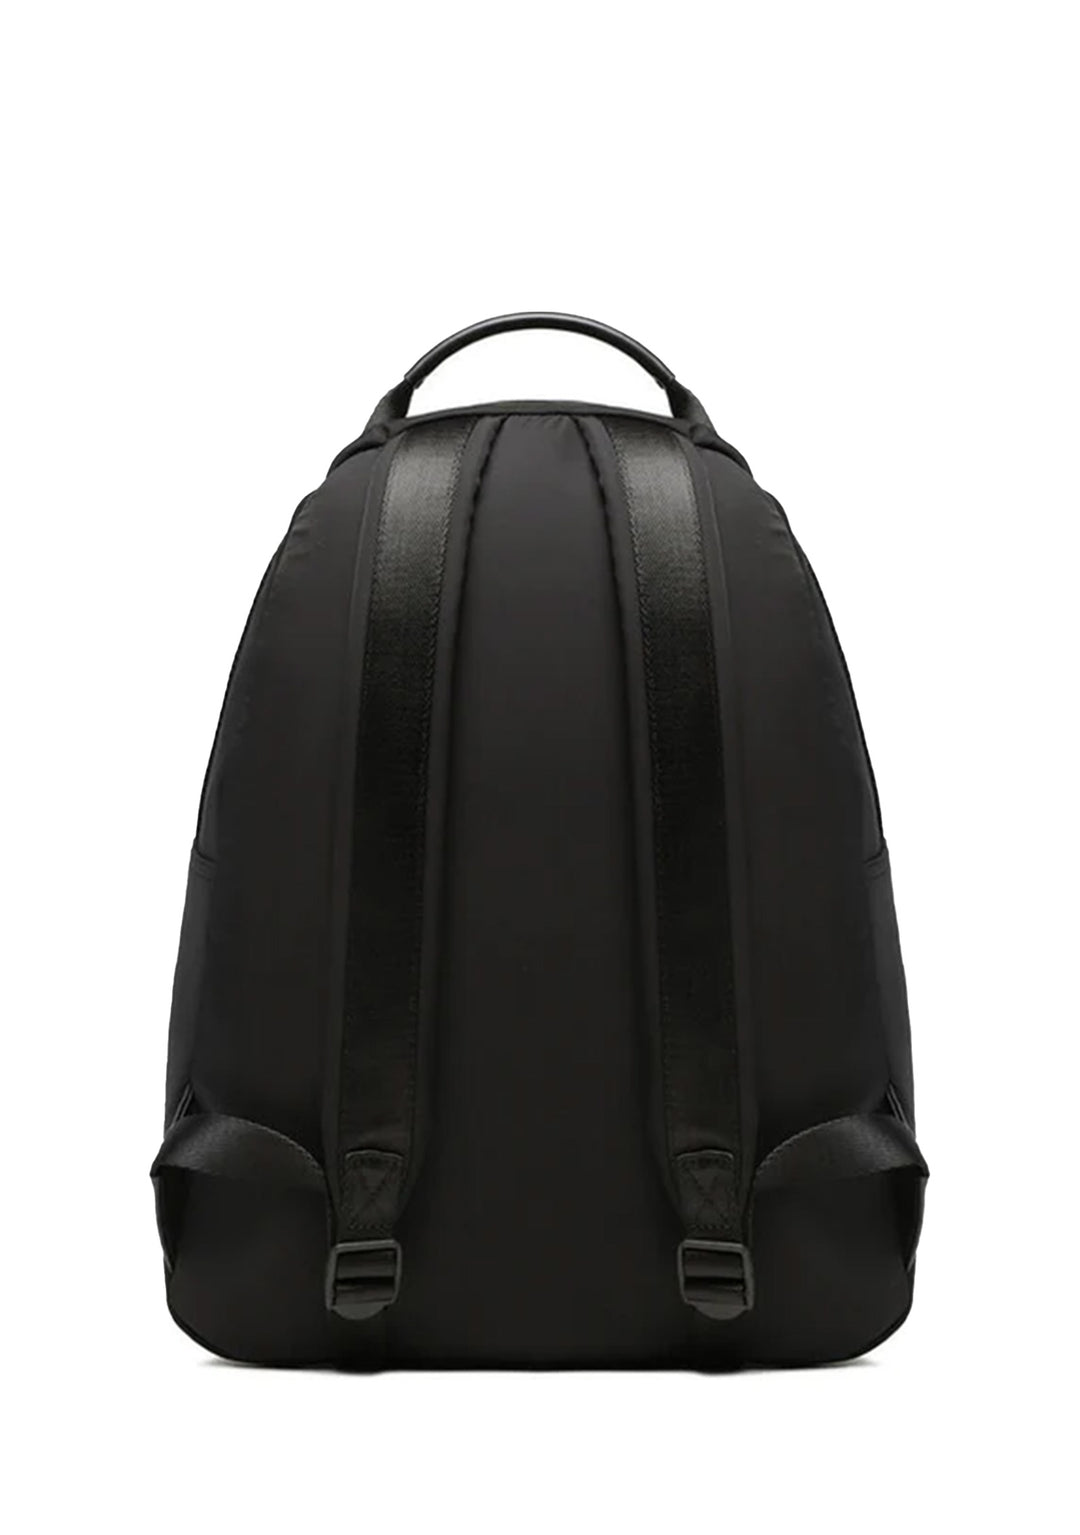 VERSACE JEANS - Black backpack